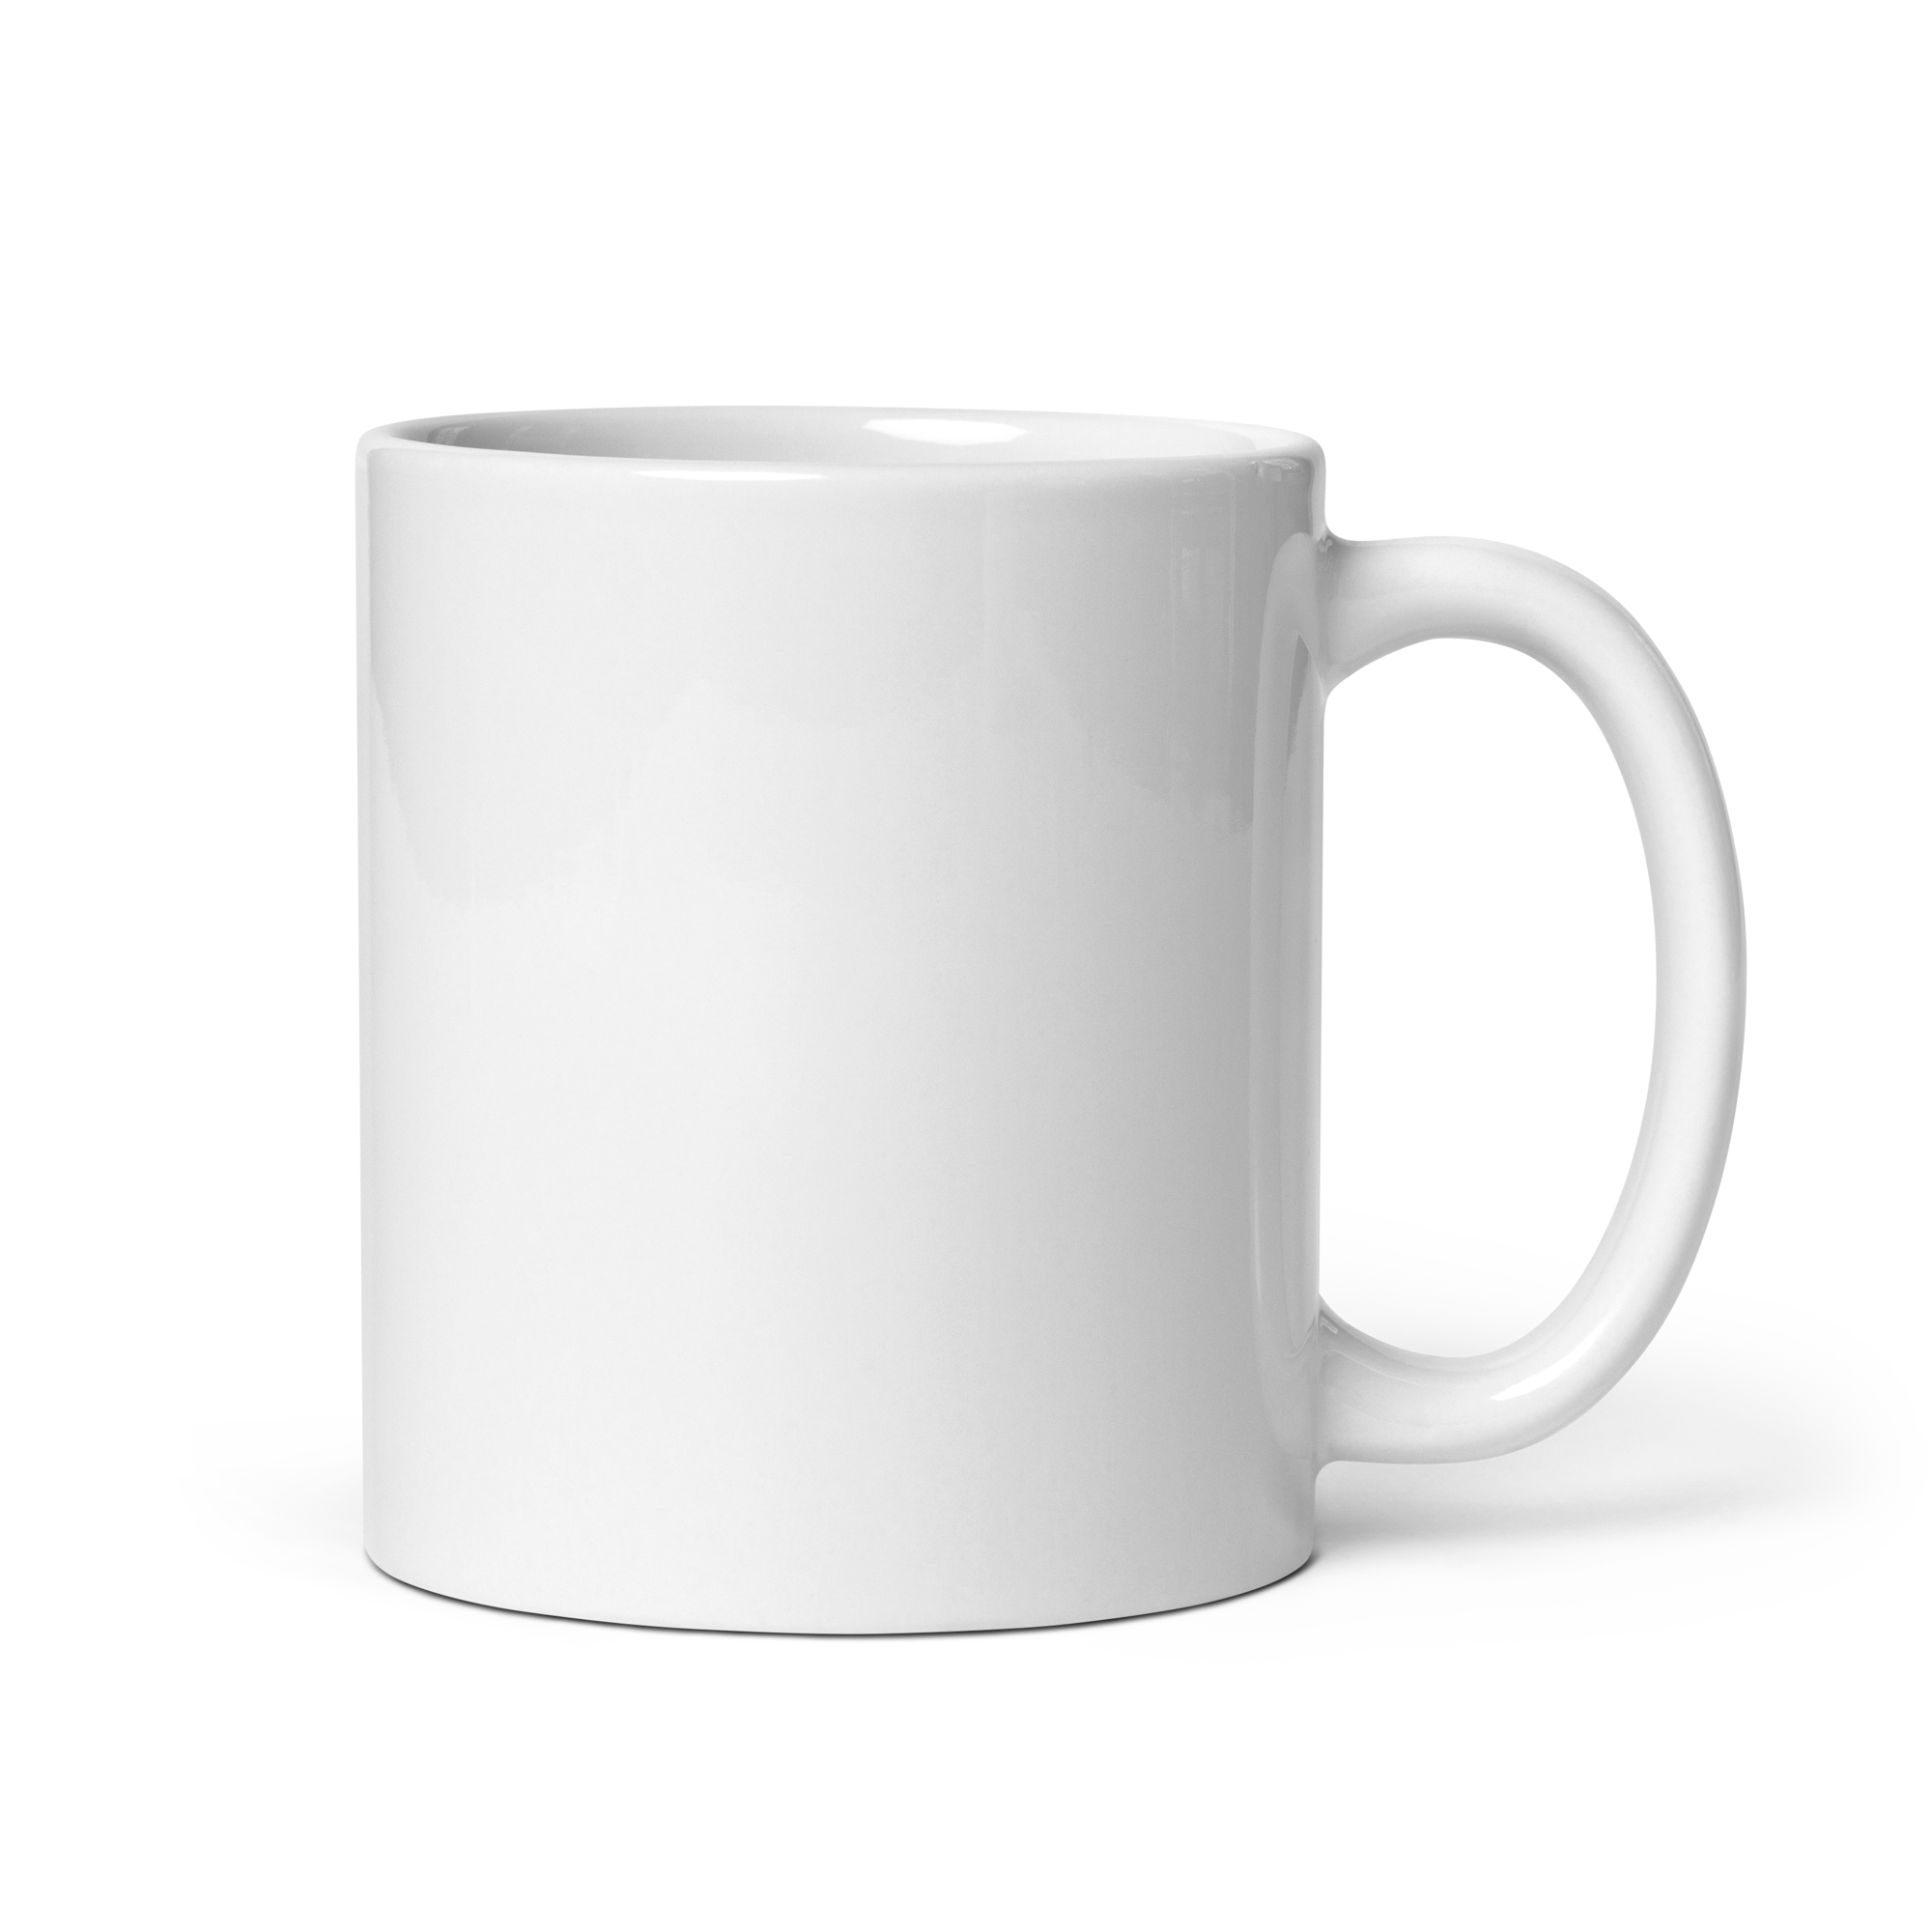 Coffe Break Mug